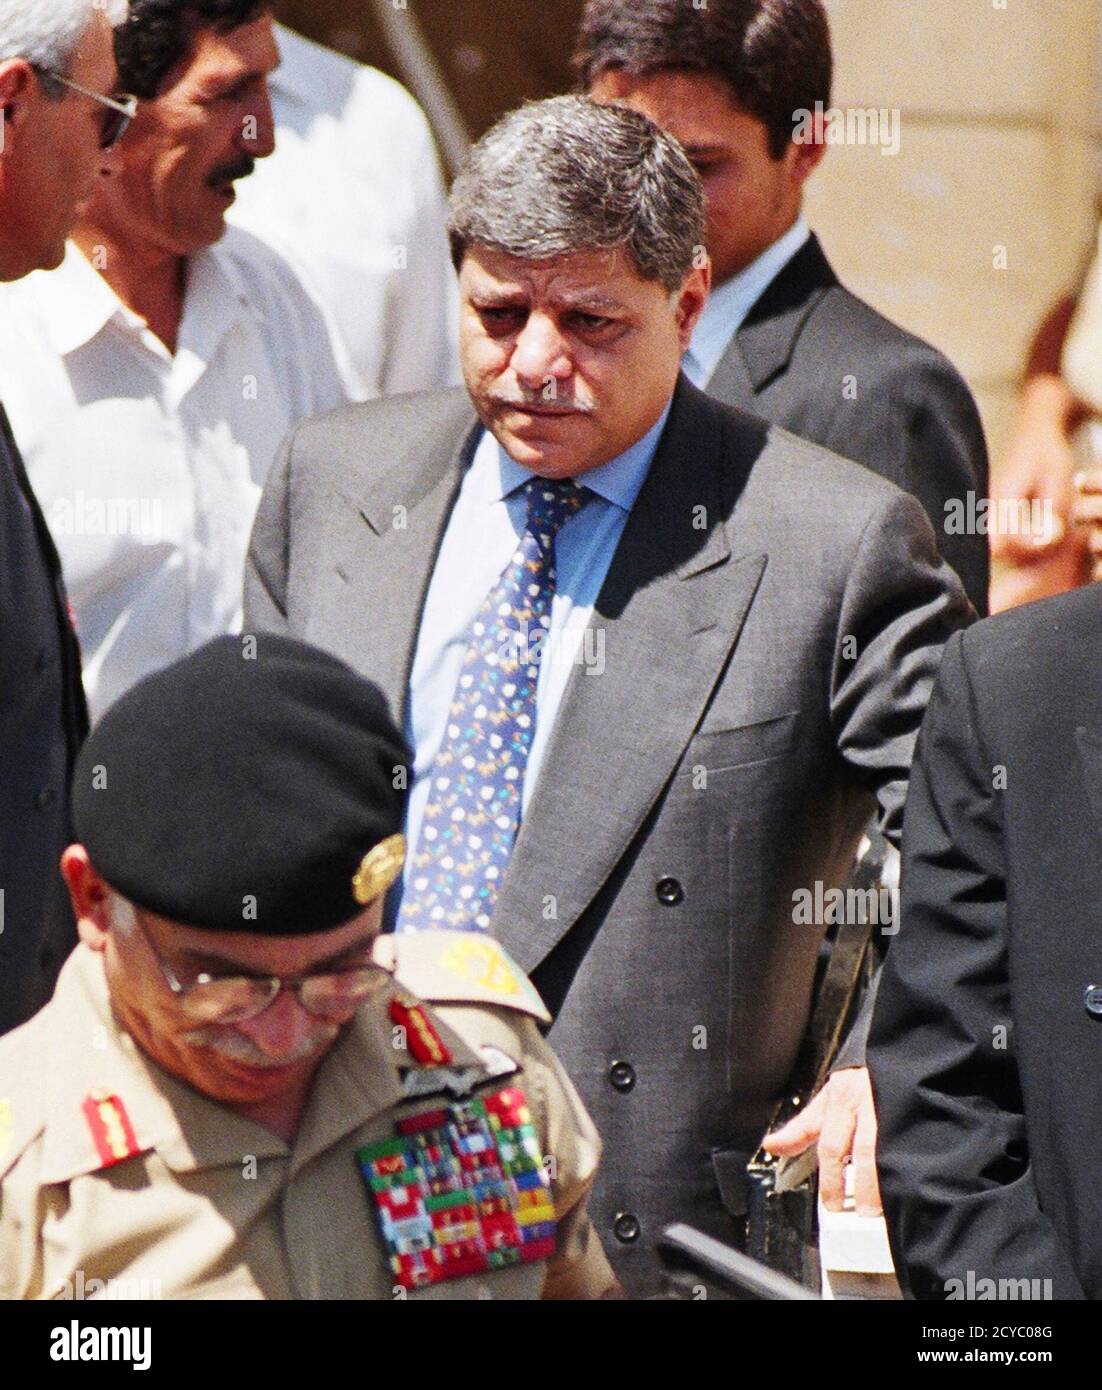 Awn Khasawneh (C) accompanies Jordan's late King Hussein in Amman in this  file photo taken in 1993. Jordan's King Abdullah has sacked Prime Minister  Marouf al-Bakhit, a conservative former army general and